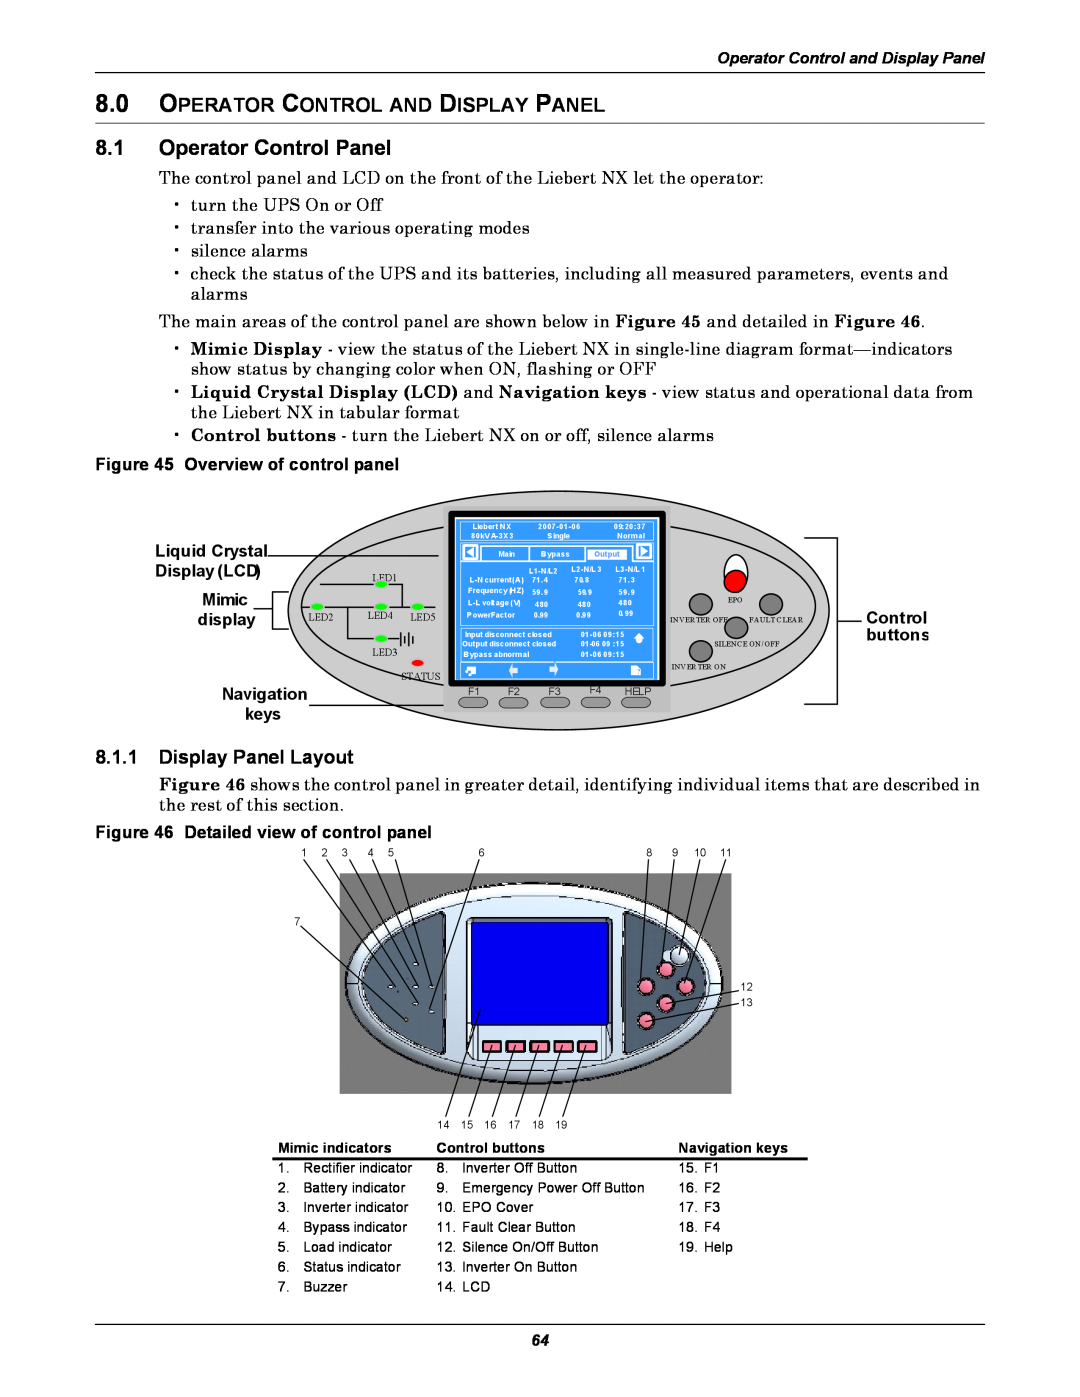 Emerson 60HZ 8.0OPERATOR CONTROL AND DISPLAY PANEL, 8.1.1Display Panel Layout, Overview of control panel, Navigation keys 